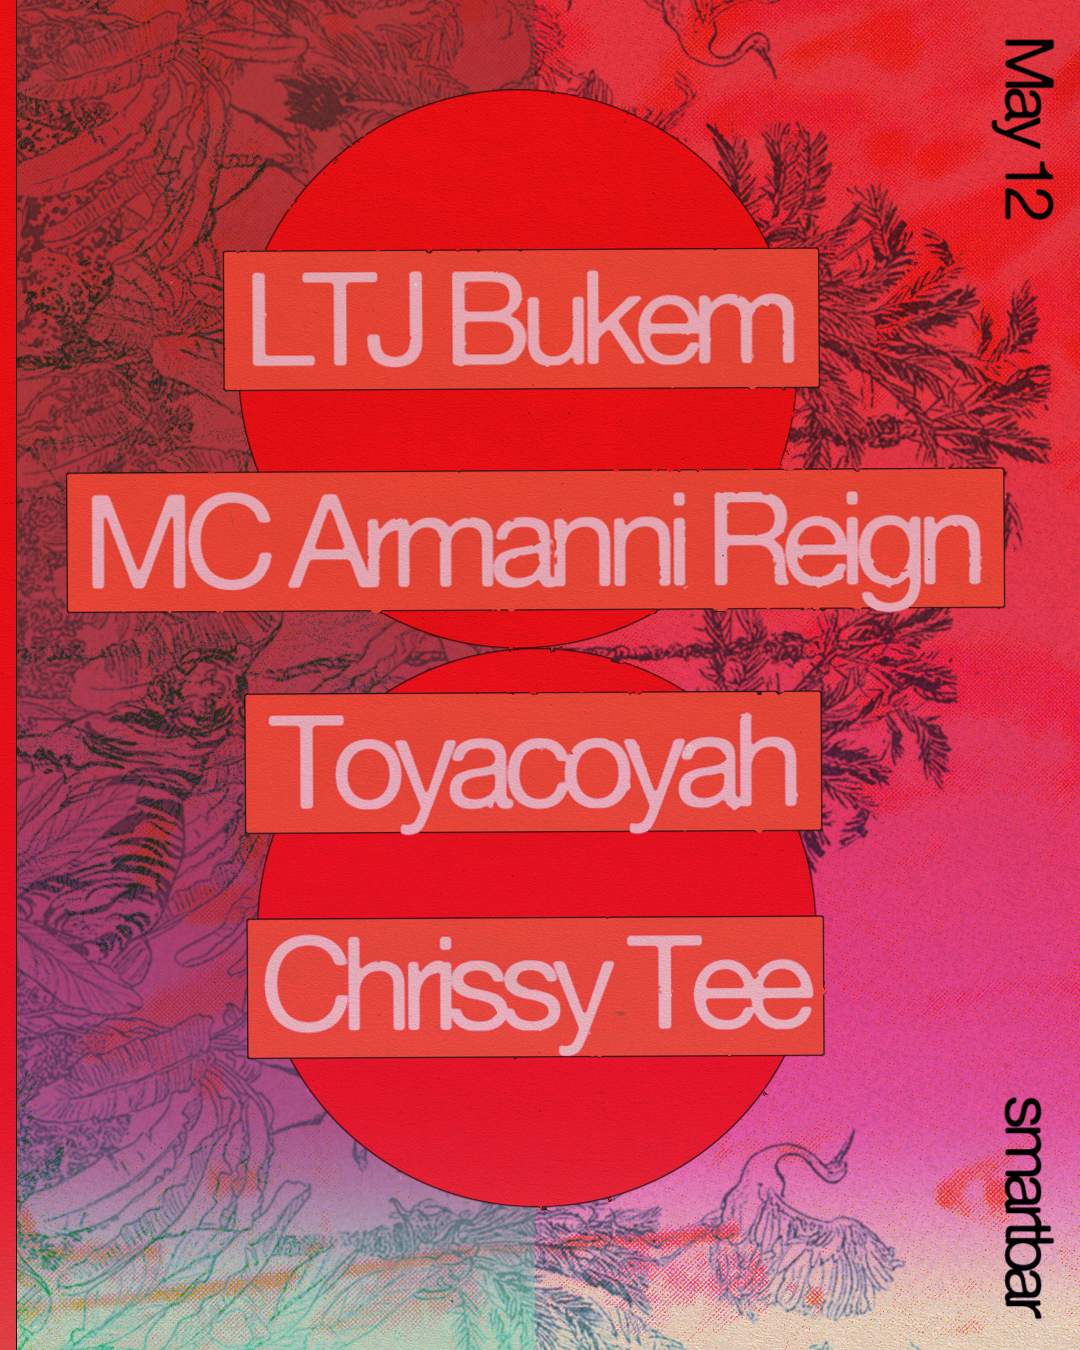 LTJ Bukem - MC Armanni Reign - Toyacoyah - Chrissy Tee - フライヤー表